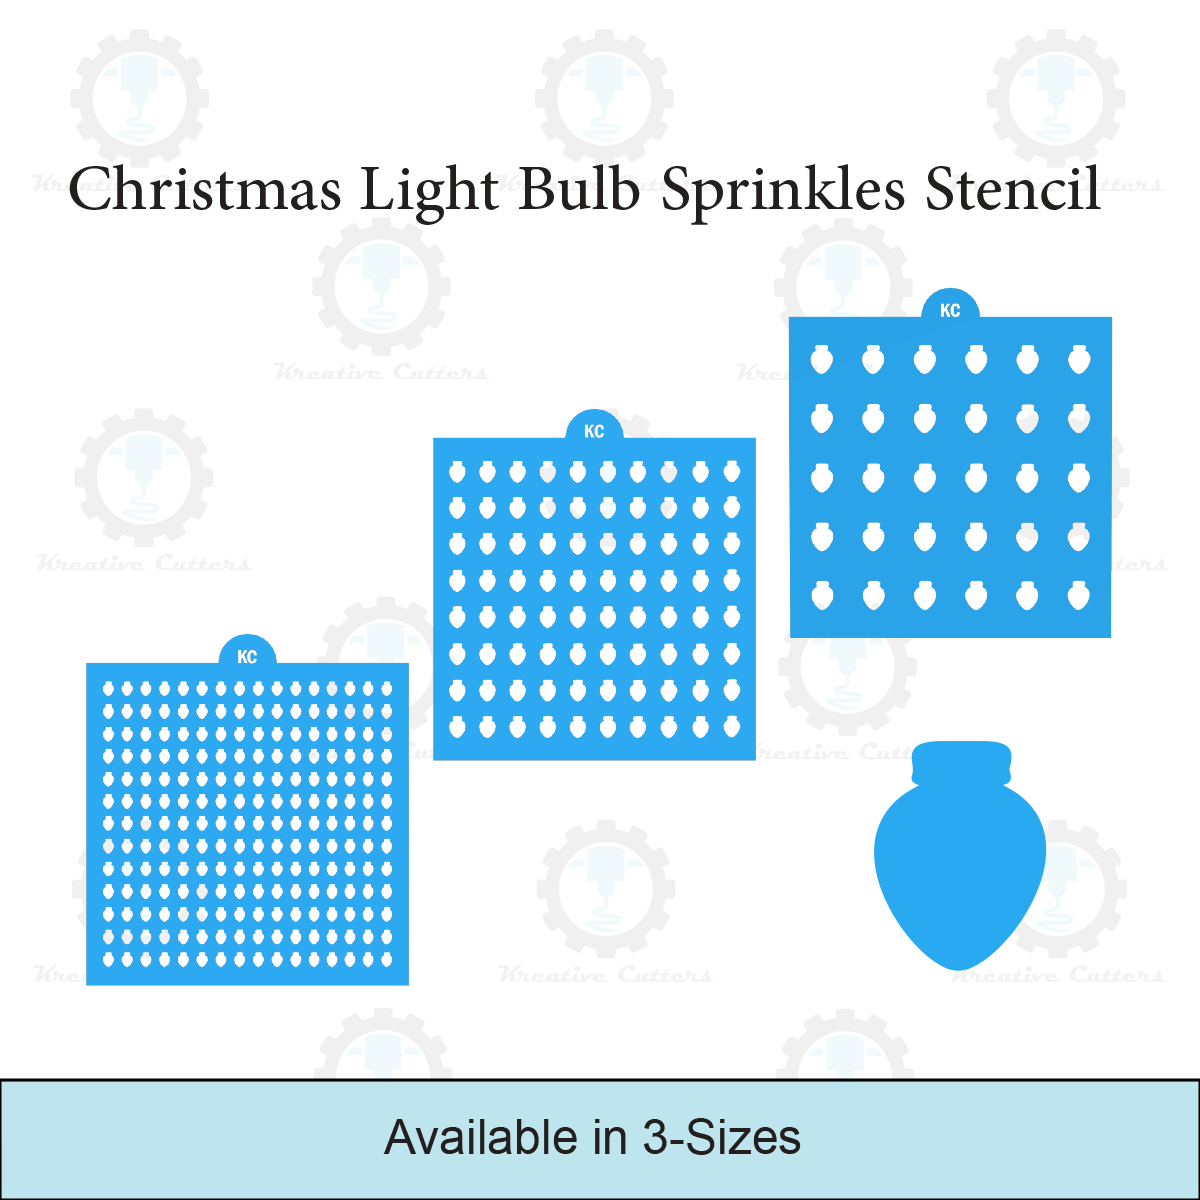 Christmas Light Bulb Sprinkles Stencil | 3D Printed, Cookie, Cake, & Cupcake, Decorating Stencils